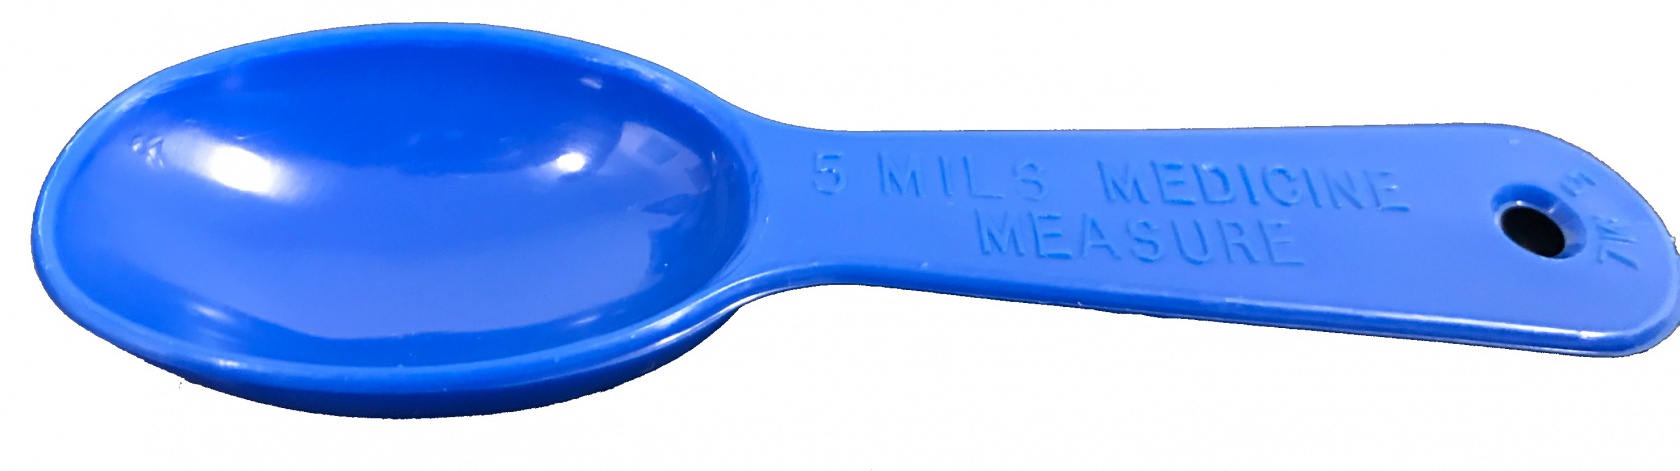 Medicine Spoon Blue 5ml Uropack Rex image 0